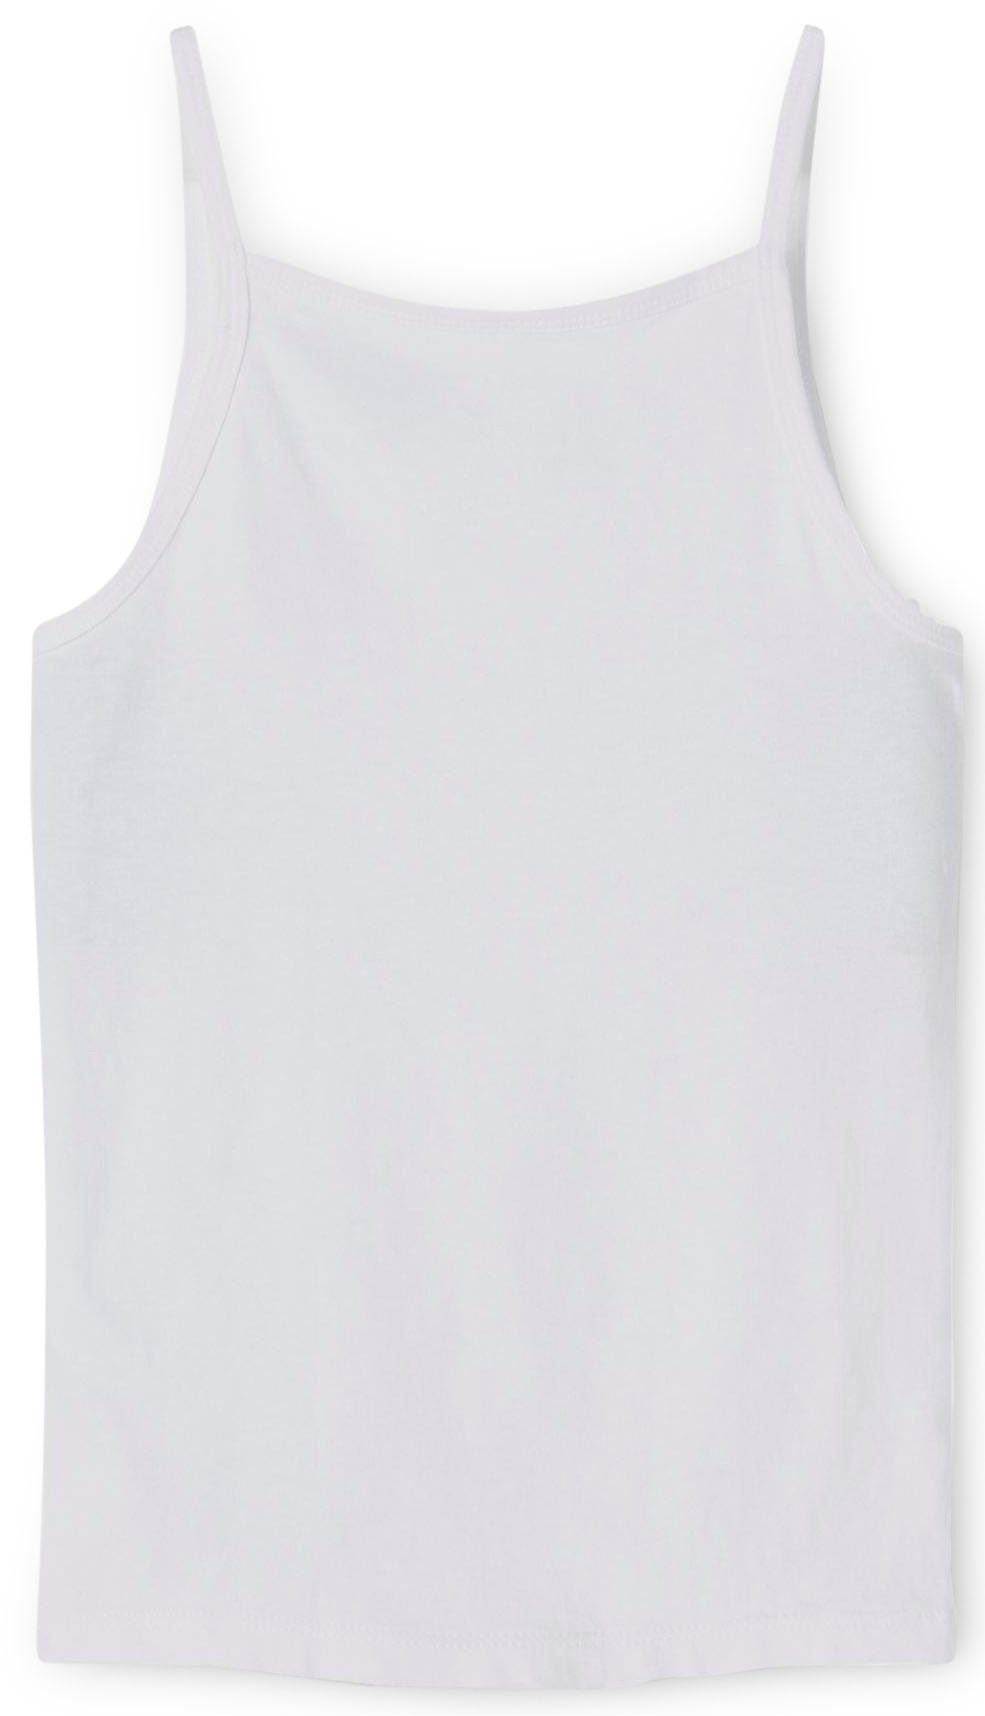 Unterhemd It Name white 2-St) (Packung, bright